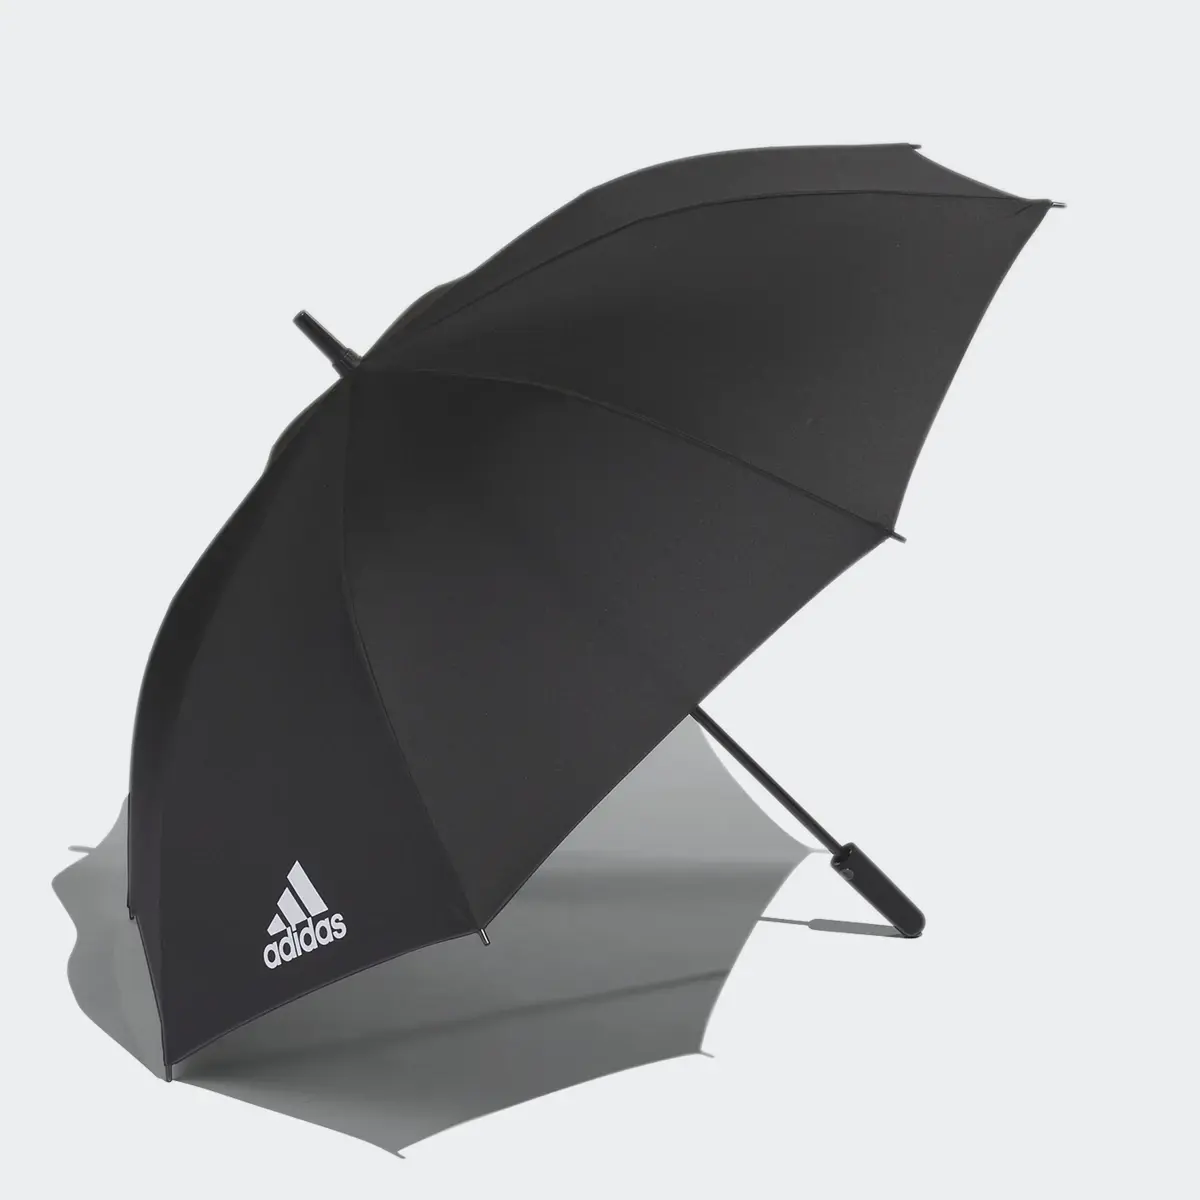 Adidas Single Canopy Umbrella 60". 3